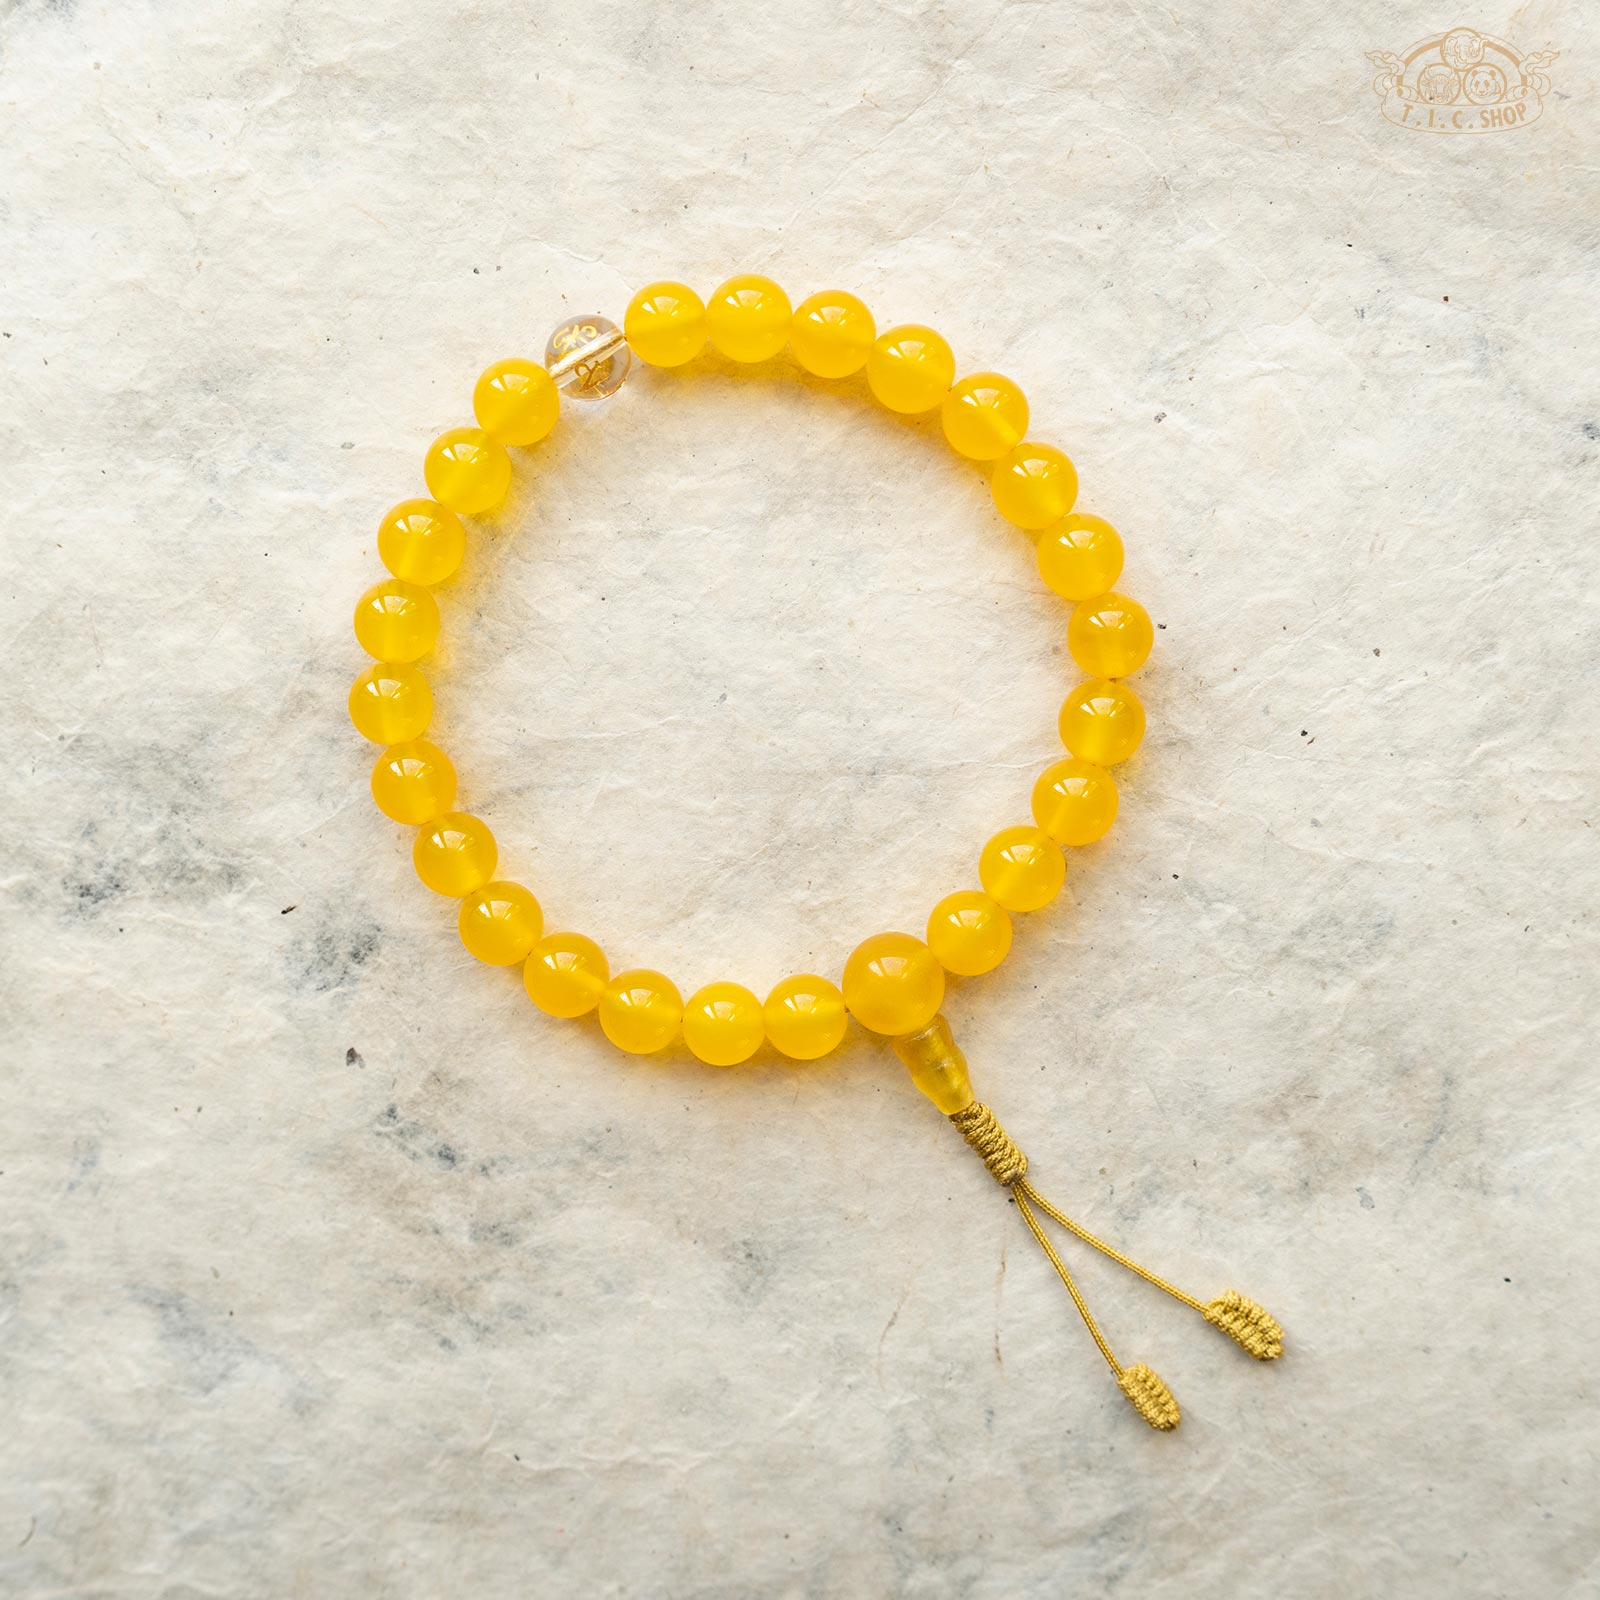 Om Mantra Yellow Agate 8mm Beads Wrist Mala